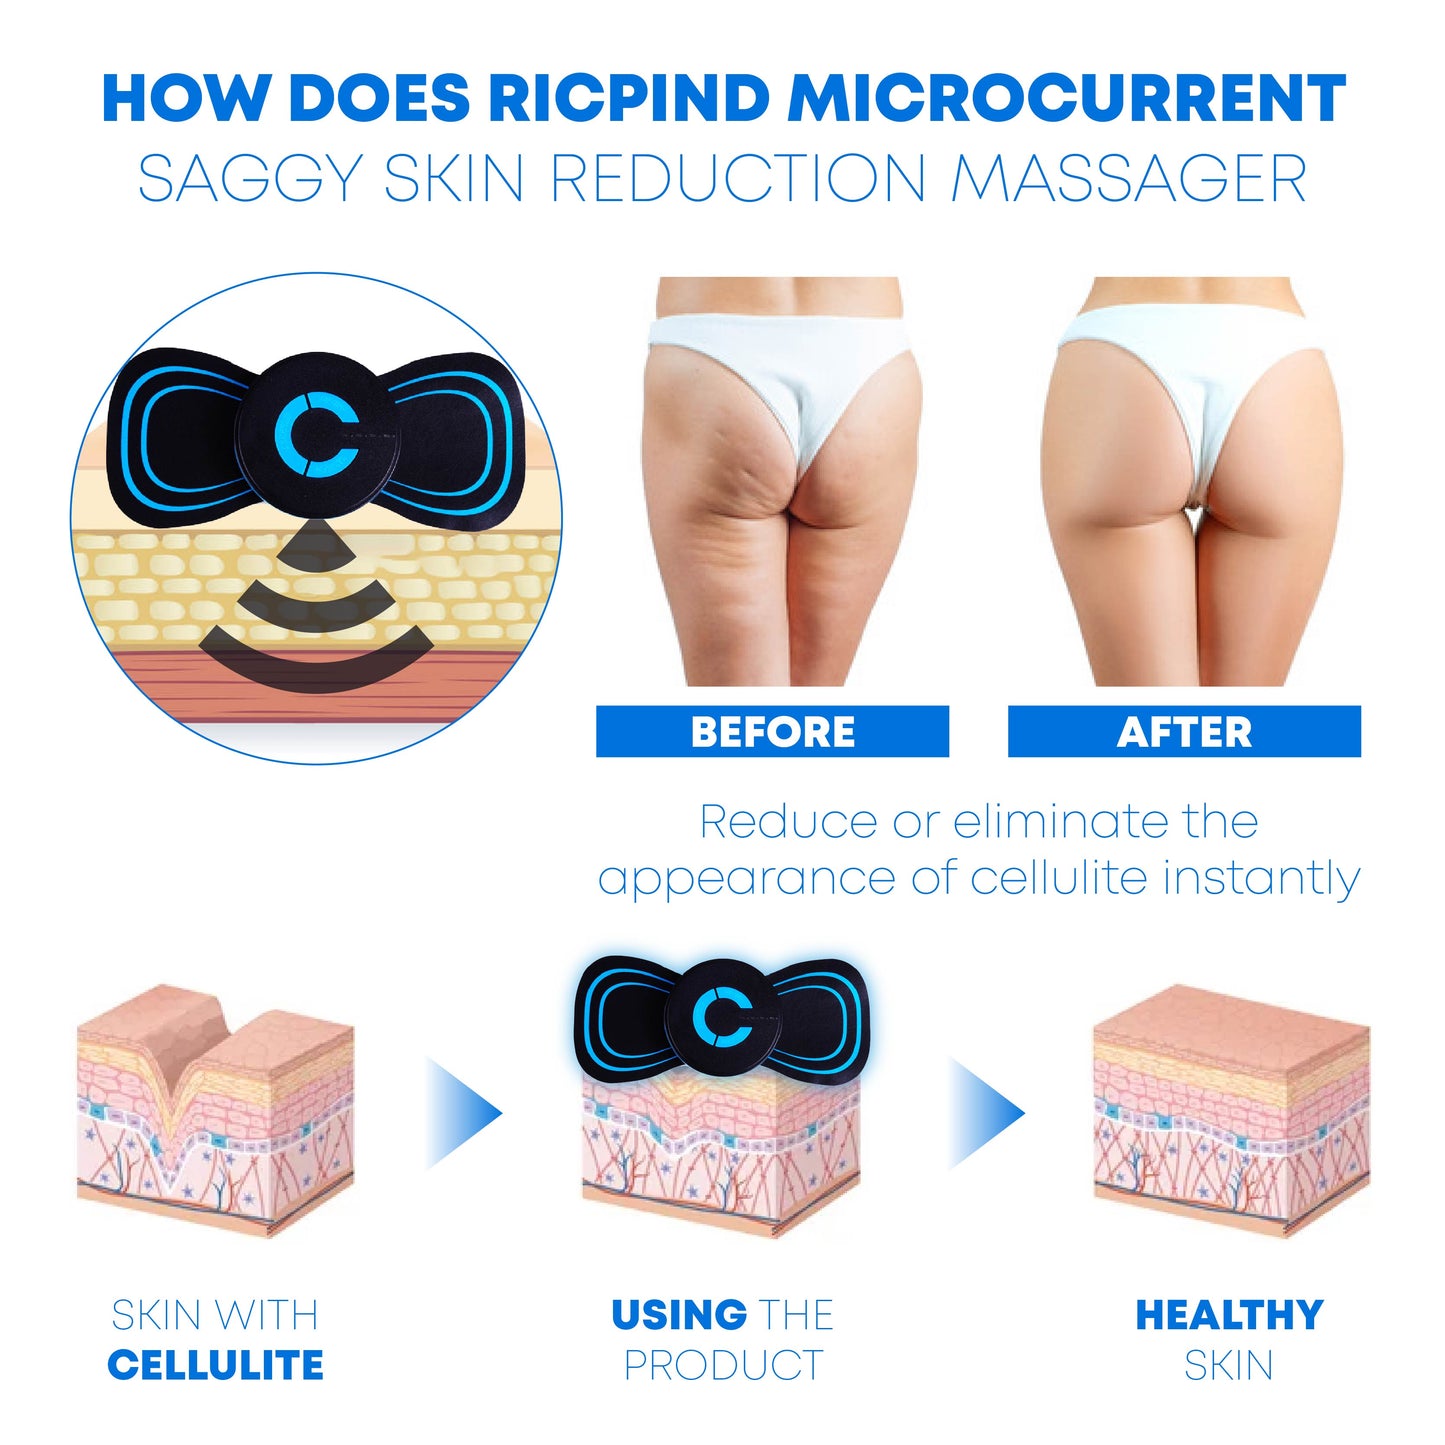 Ricpind Microcurrent SaggyReduction Massager